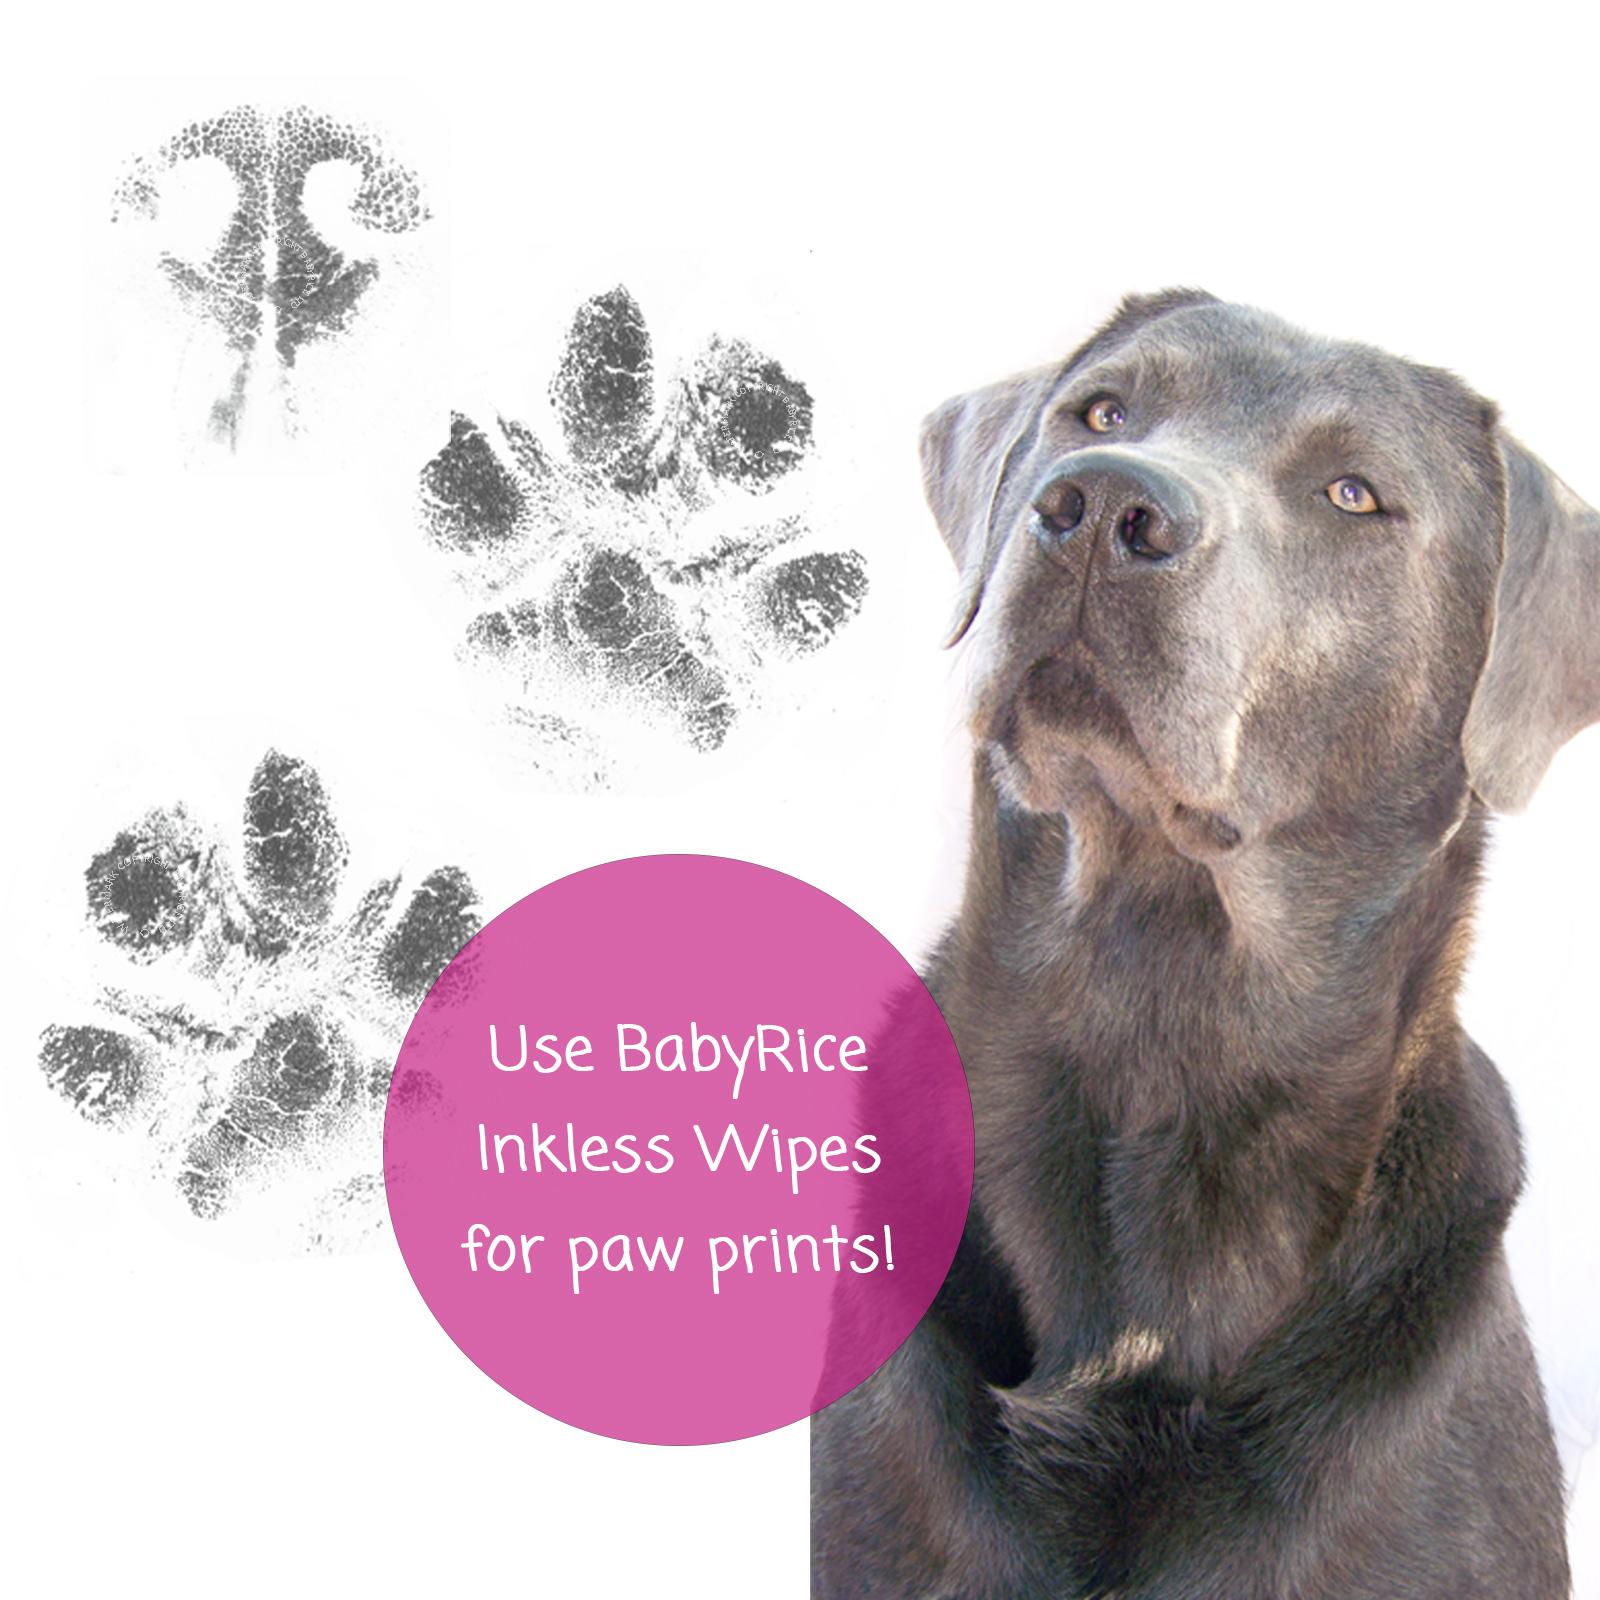 Baby Inkless Footprint Kit Handprint Pet Paw Print Kit Ink Pads 2 Packs  Medium Size M (Pack of 2) Black